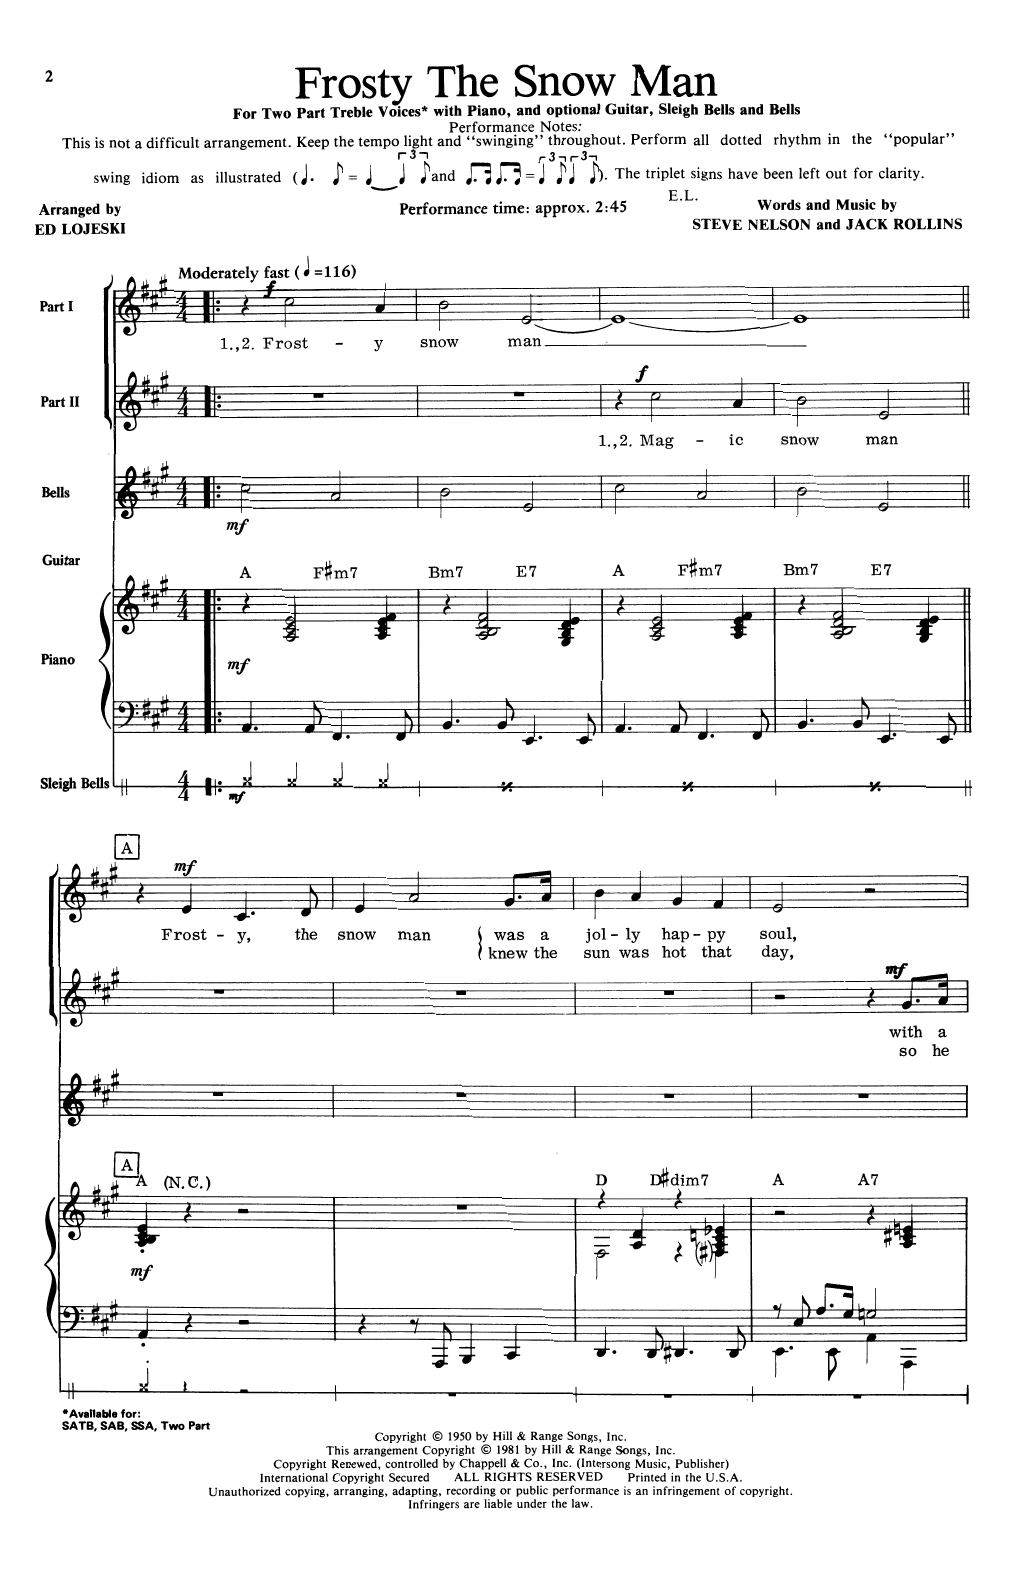 Jack Rollins & Steve Nelson Frosty The Snow Man (arr. Ed Lojeski) Sheet Music Notes & Chords for SAB Choir - Download or Print PDF